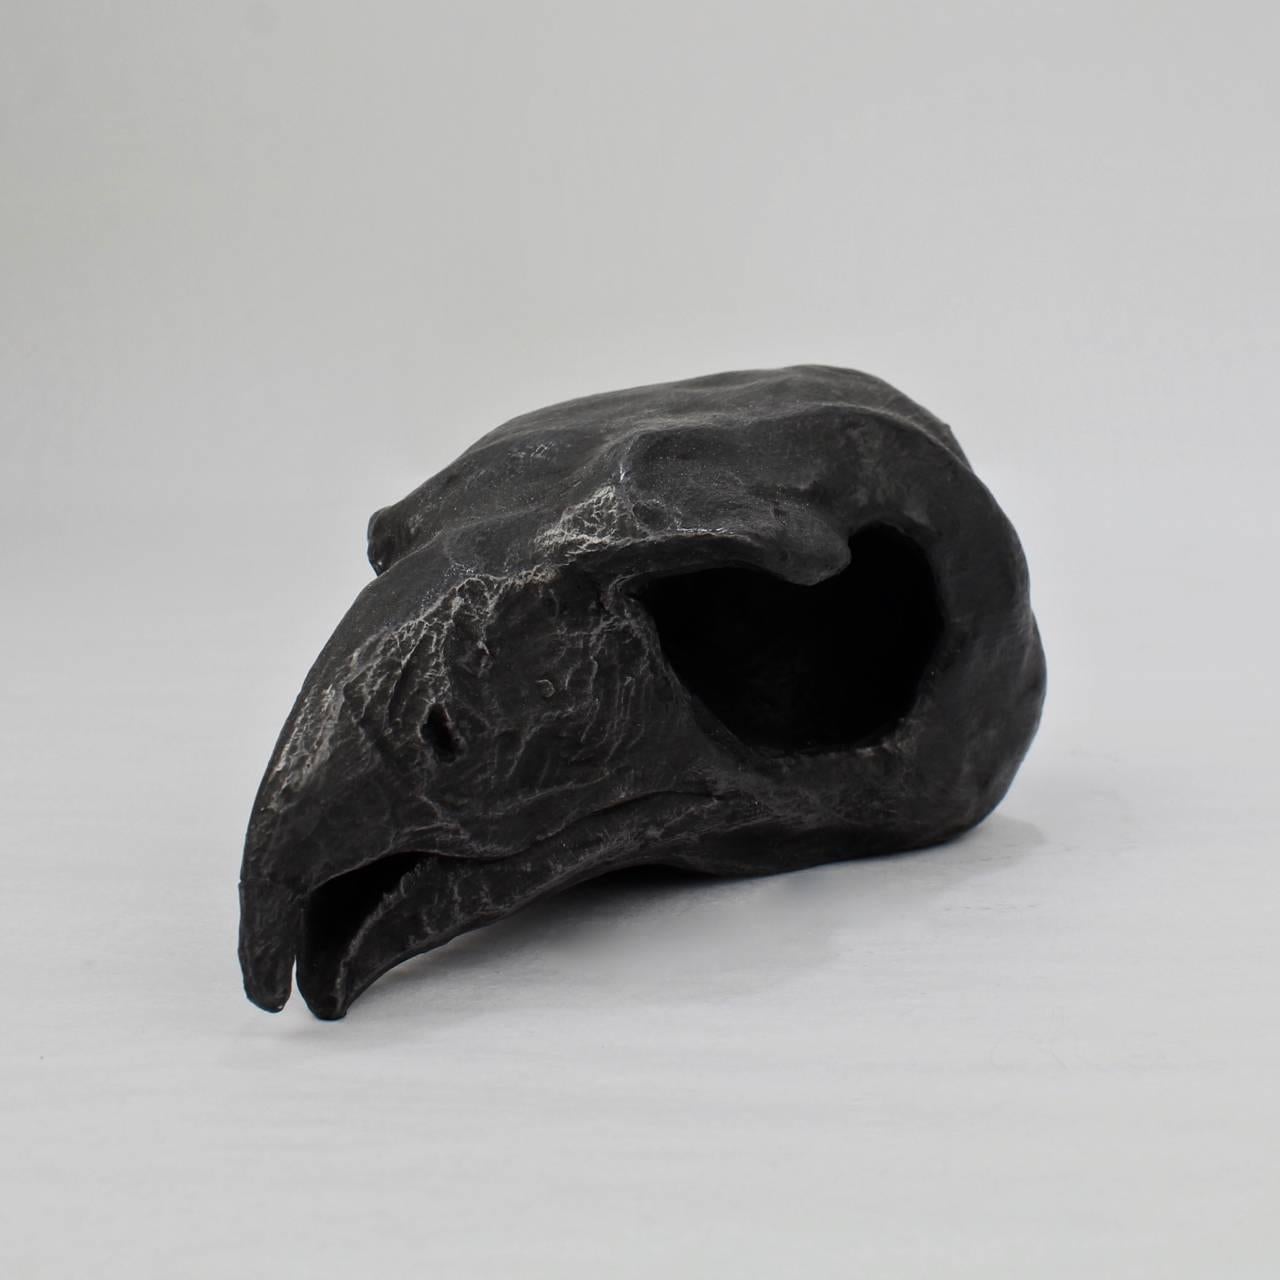 black vulture skull